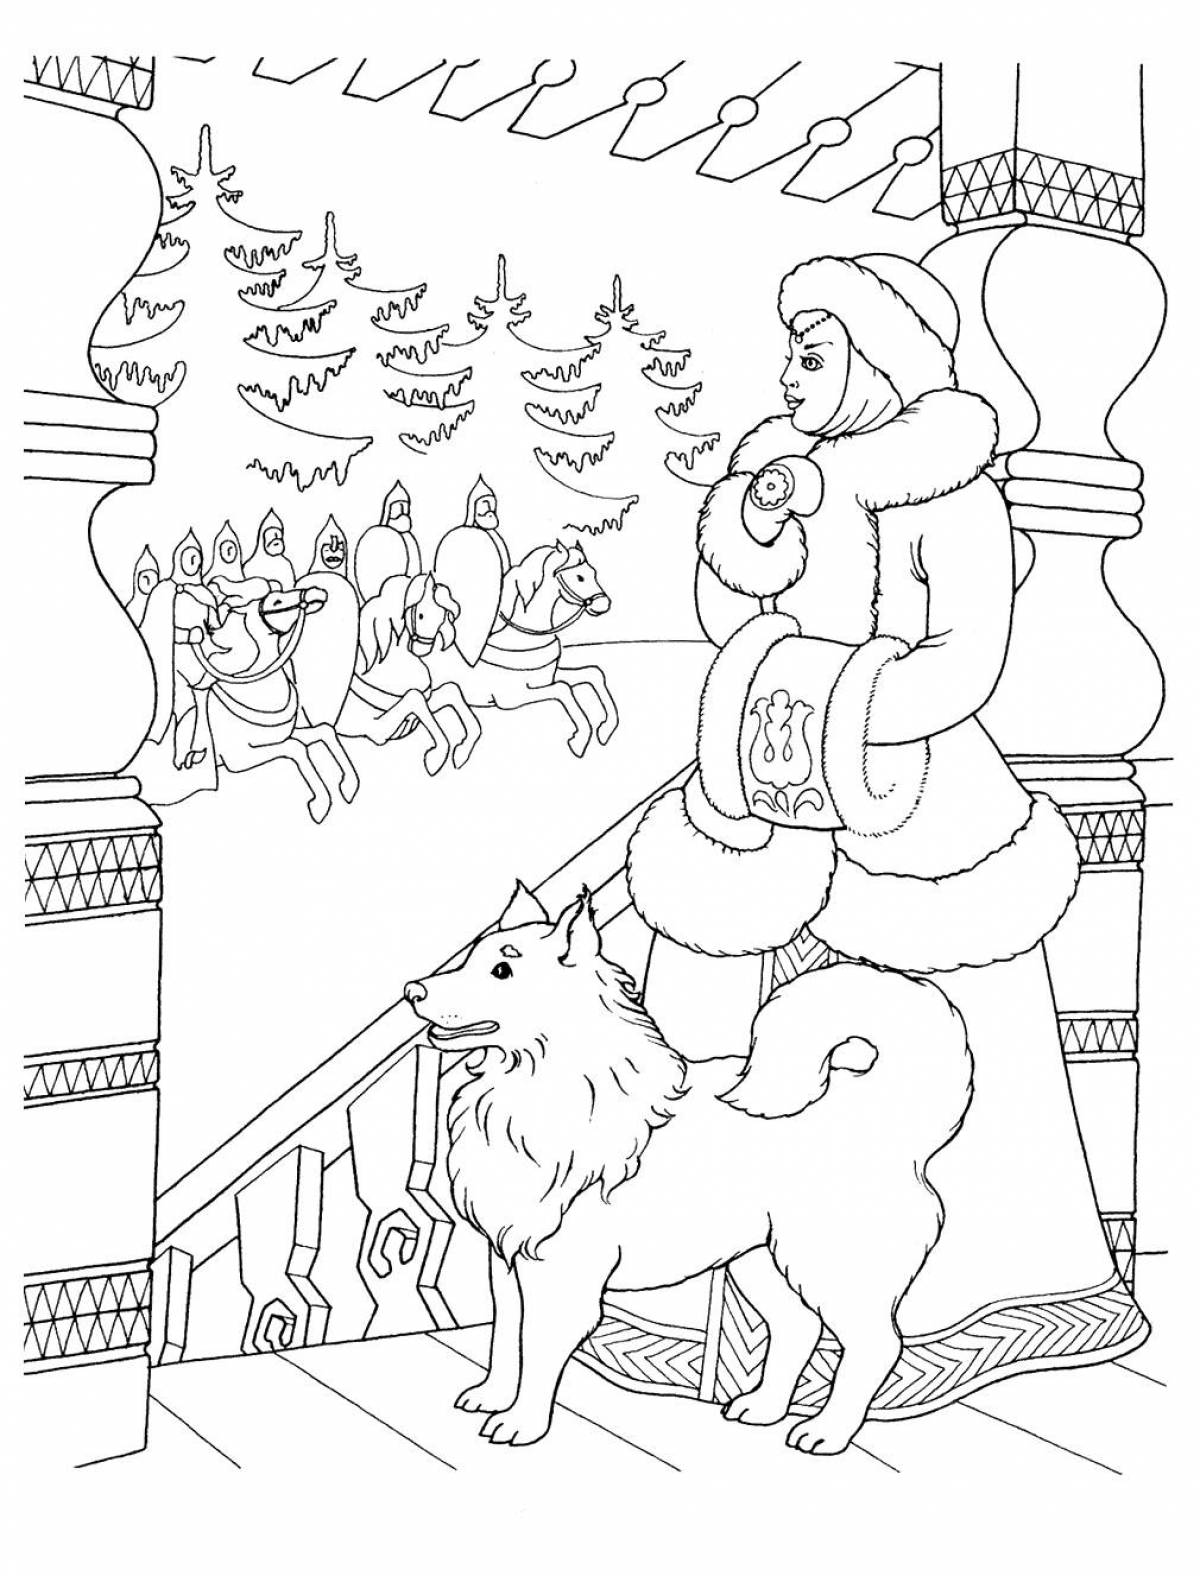 Coloring book Pushkin's festive tale